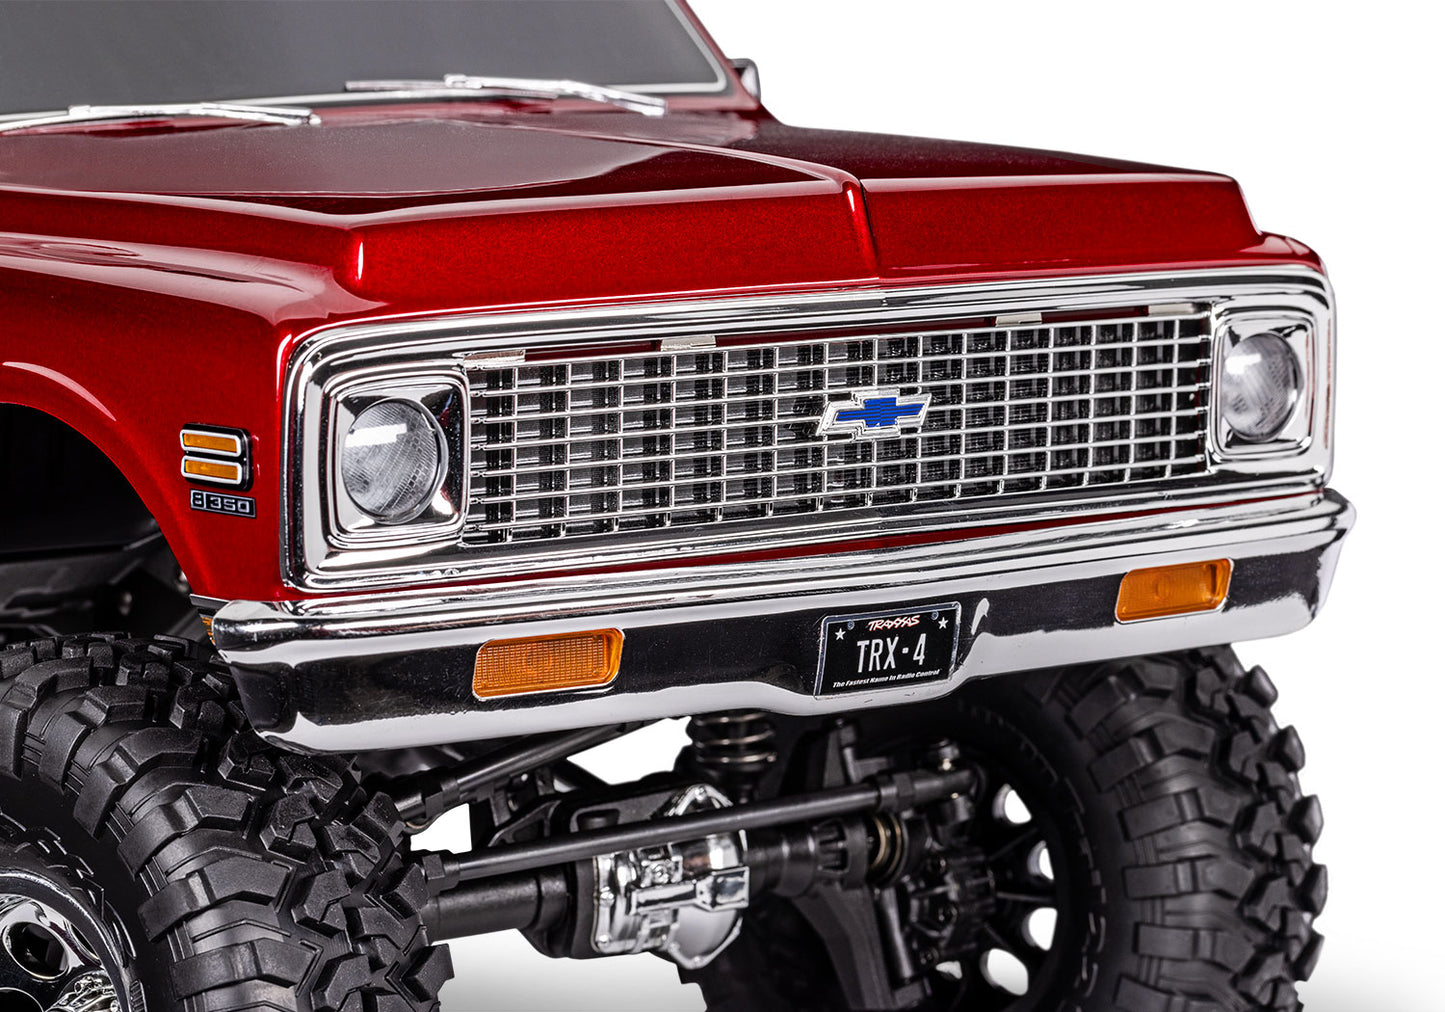 92086-4 TRX-4 Chevrolet K5 Blazer High Trail Edition Red